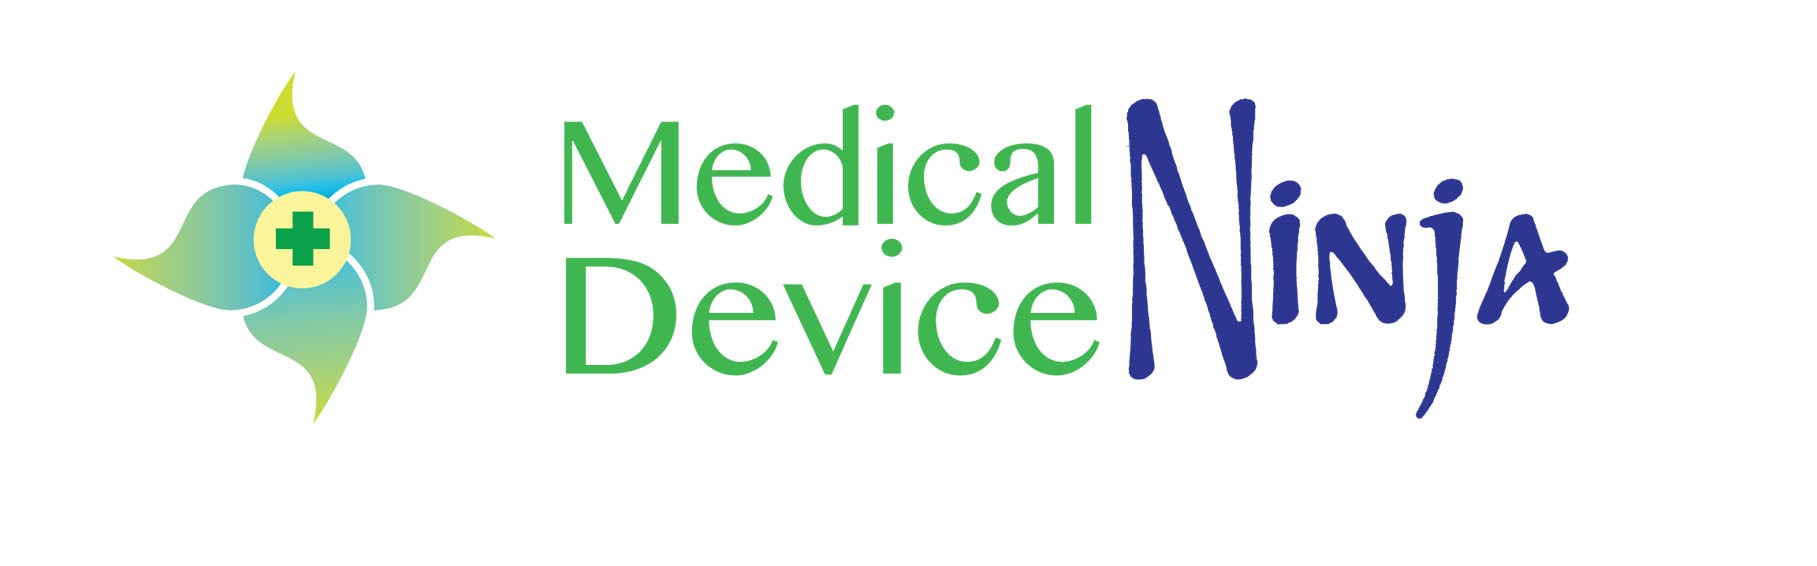 Medical Device Ninja